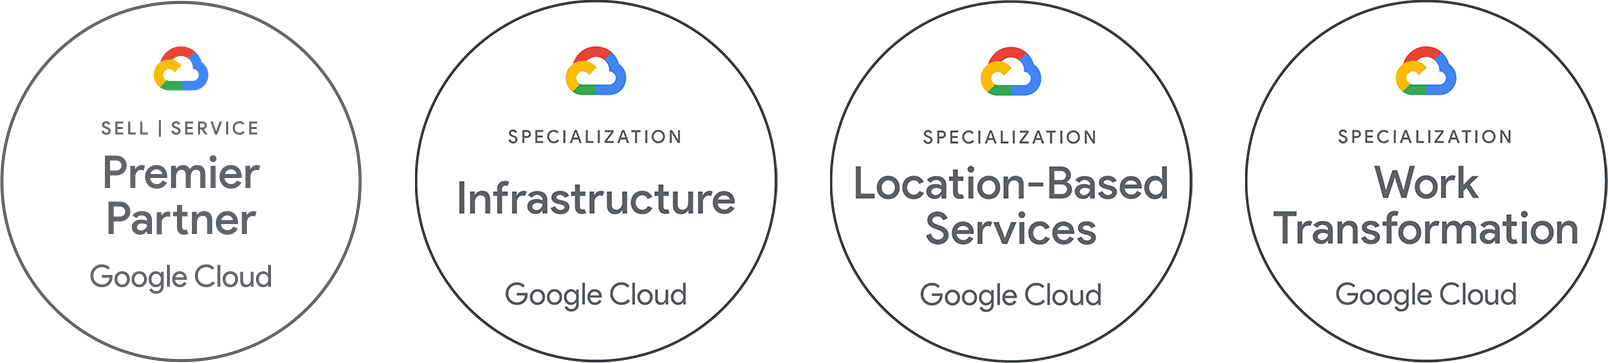 cloud-services-google-logos